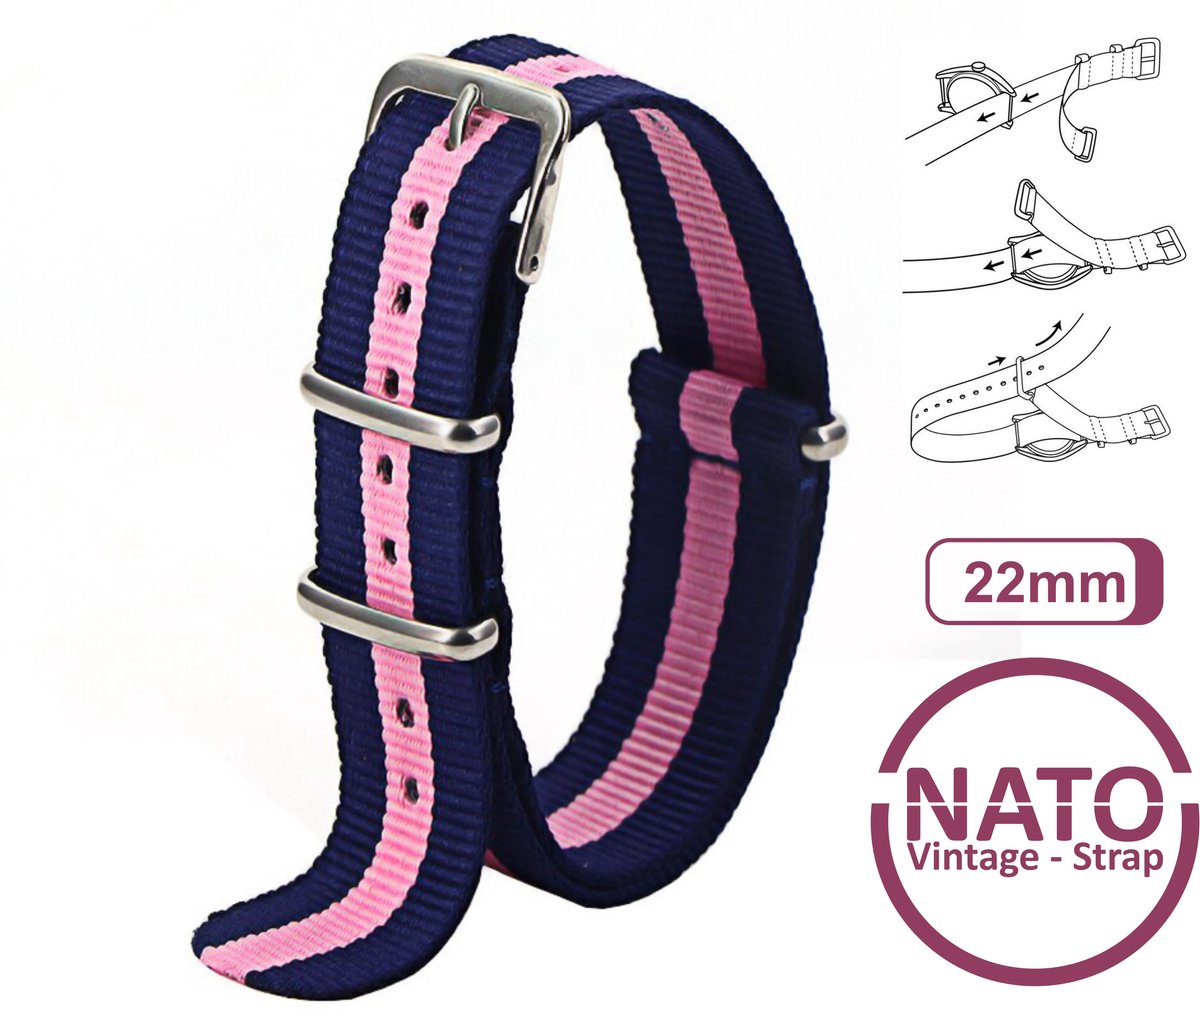 22mm Nato Strap Blauw met Roze streep - Vintage James Bond - Nato Strap collectie - Mannen - Horlogebanden - Blue Pink - 22 mm bandbreedte voor oa. Seiko Rolex Omega Casio en Citizen